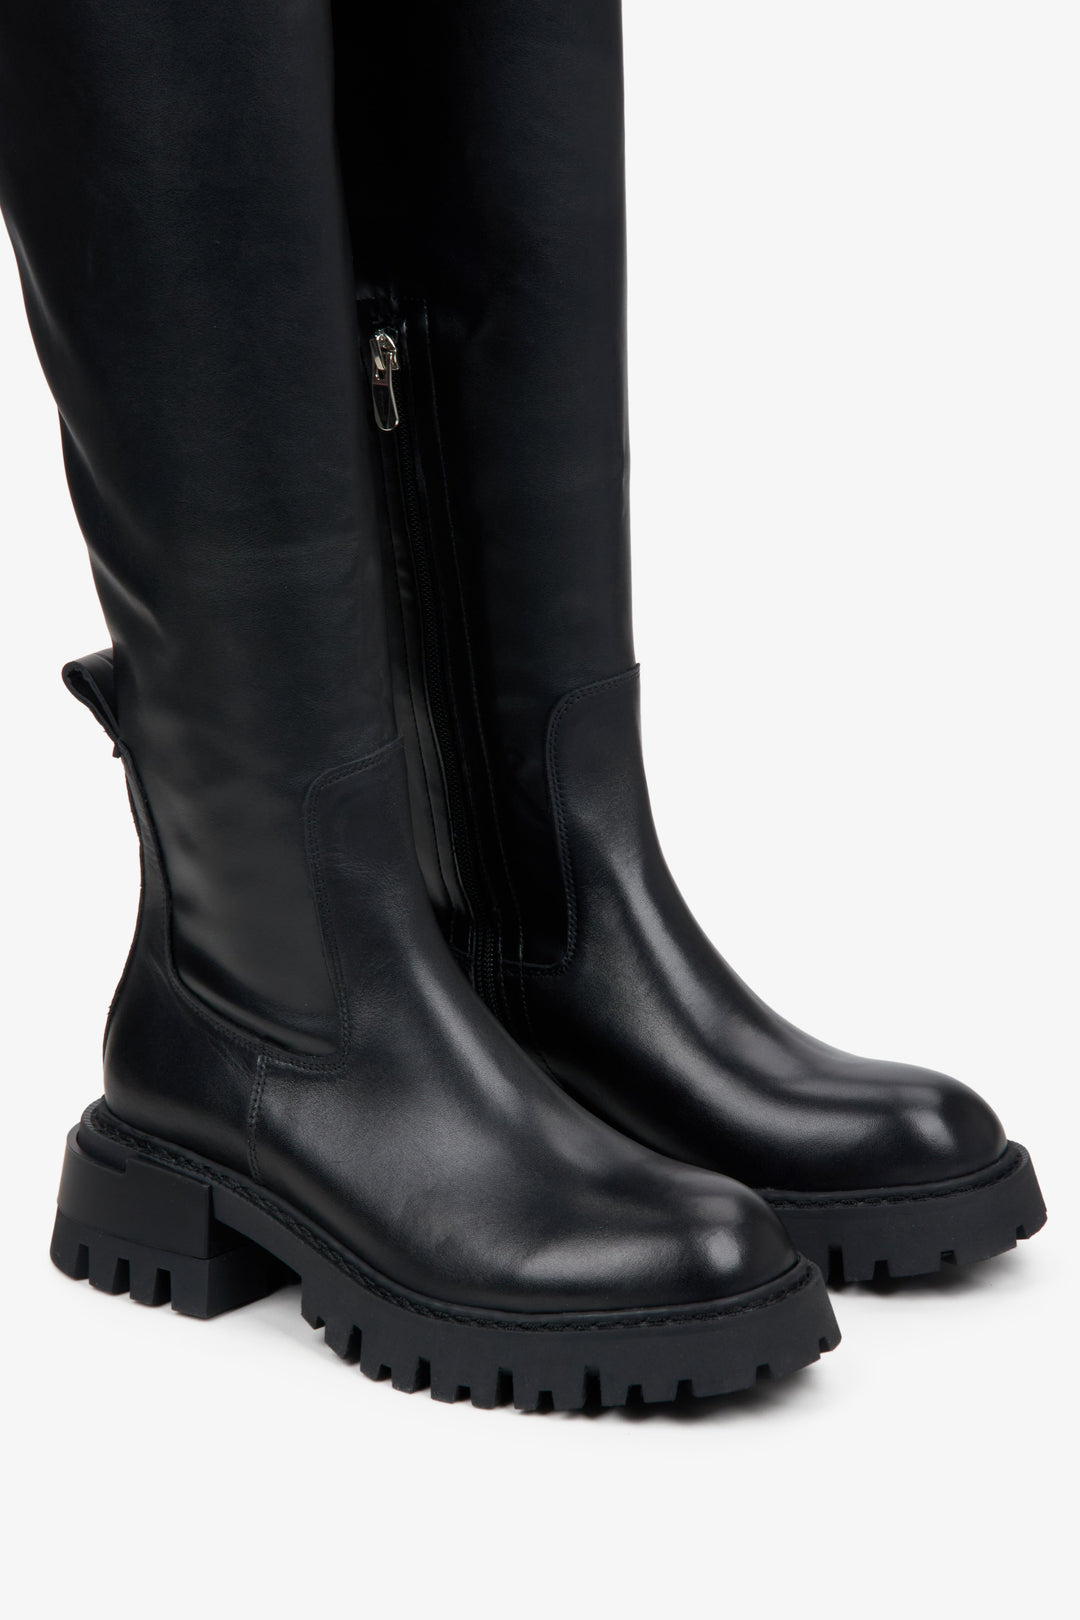 Women's black leather boots by Estro.